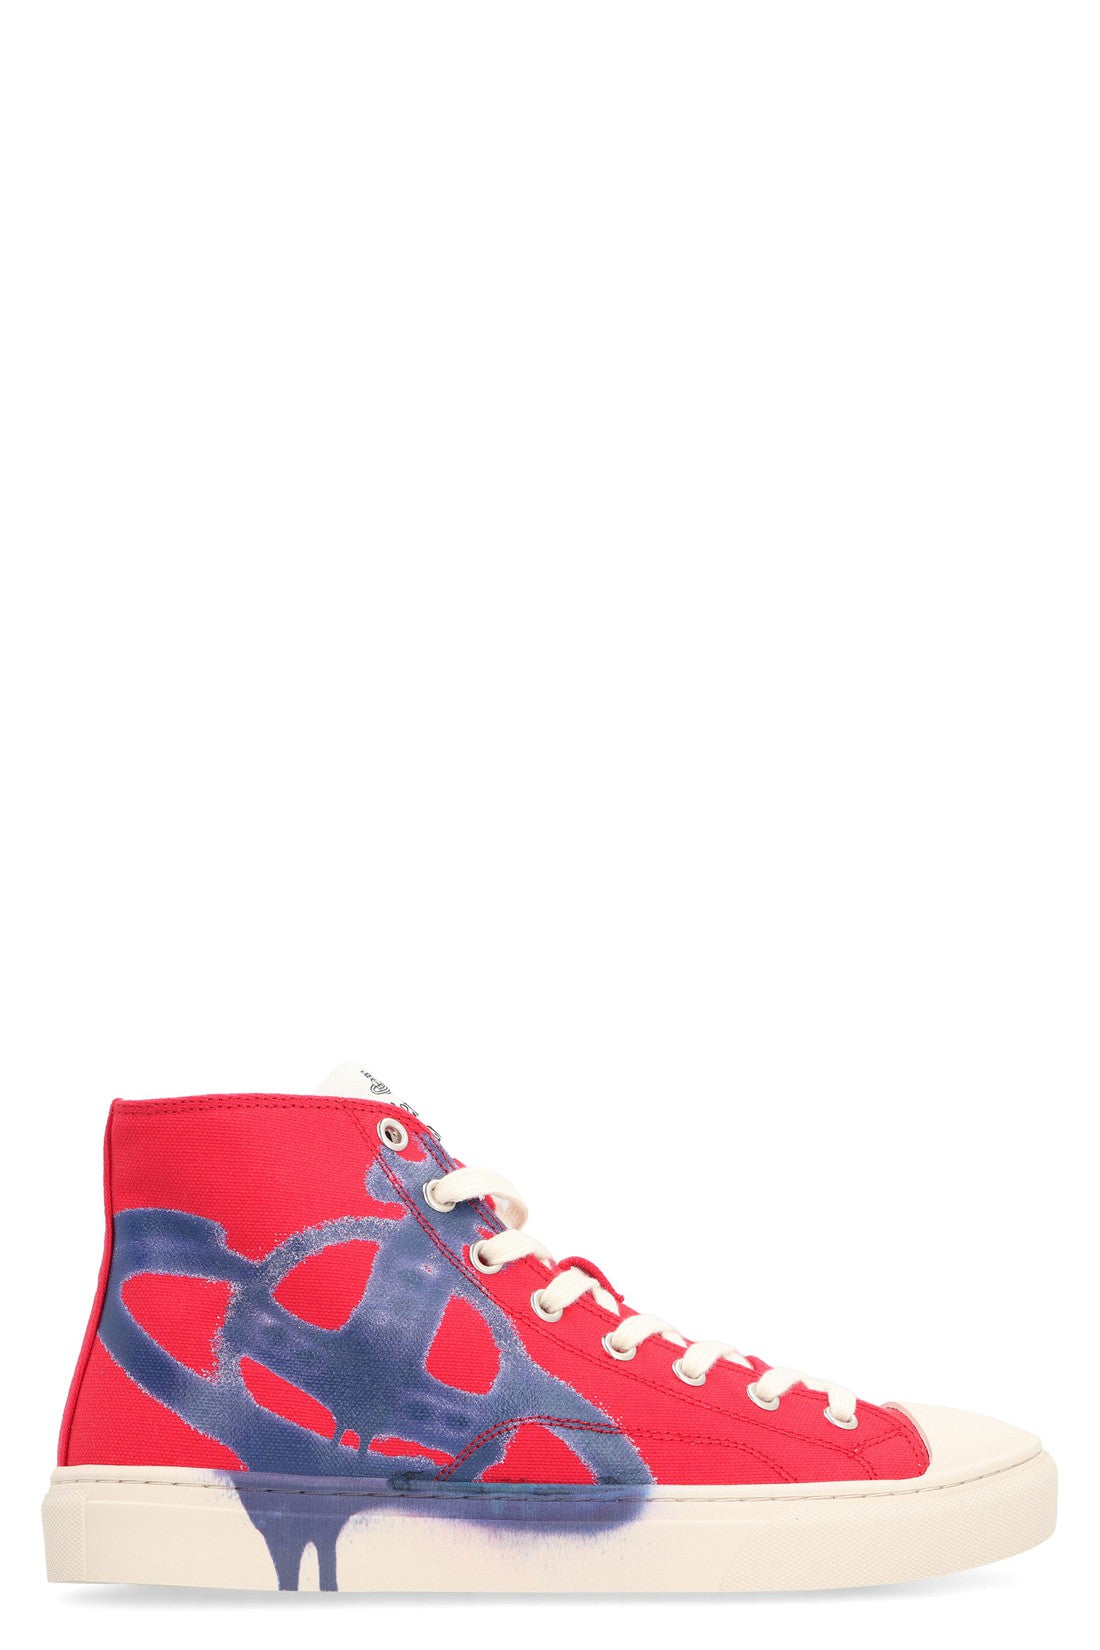 Vivienne Westwood-OUTLET-SALE-Plimsoll high-top sneakers-ARCHIVIST